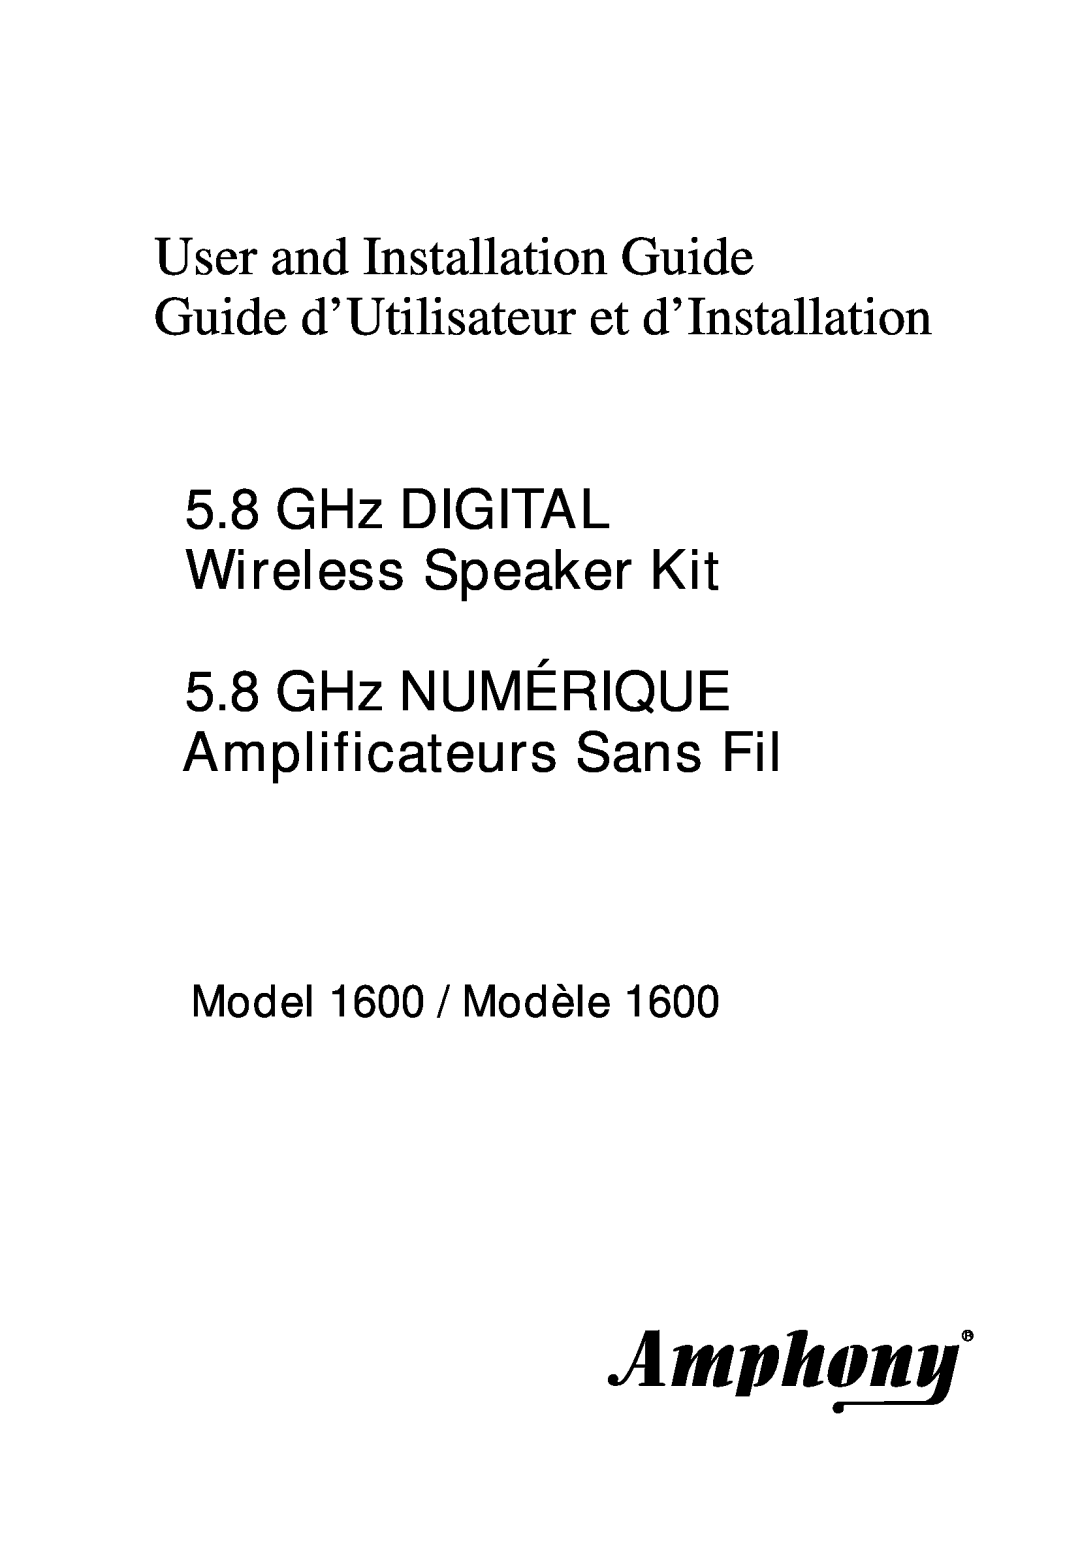 Amphony L1600, PMJT1500 manual Model 1600 / Modèle, User and Installation Guide, Guide d’Utilisateur et d’Installation 